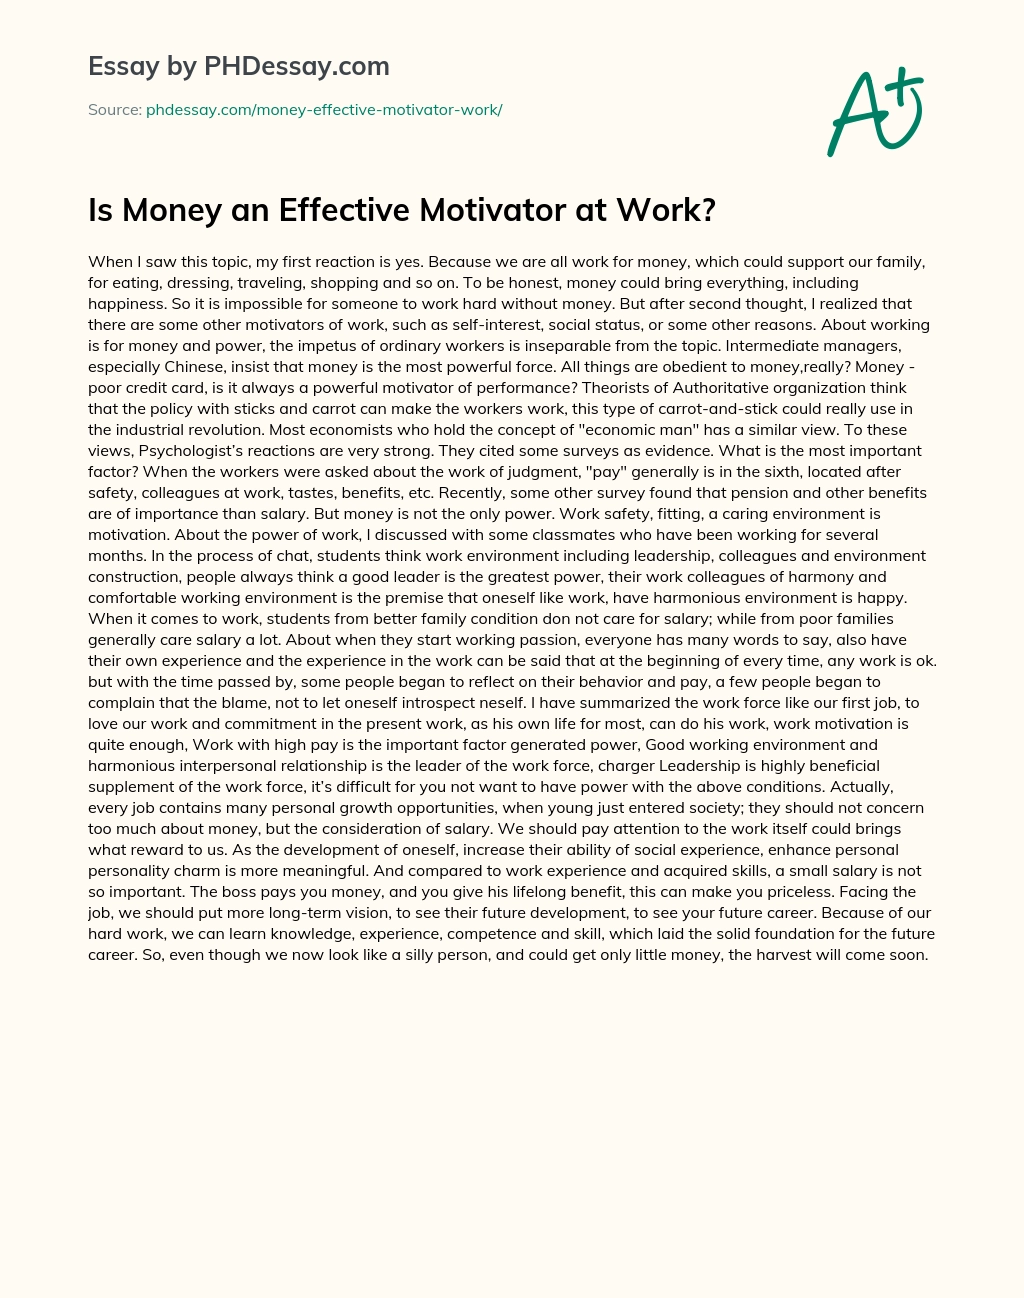 Is Money an Effective Motivator at Work? essay